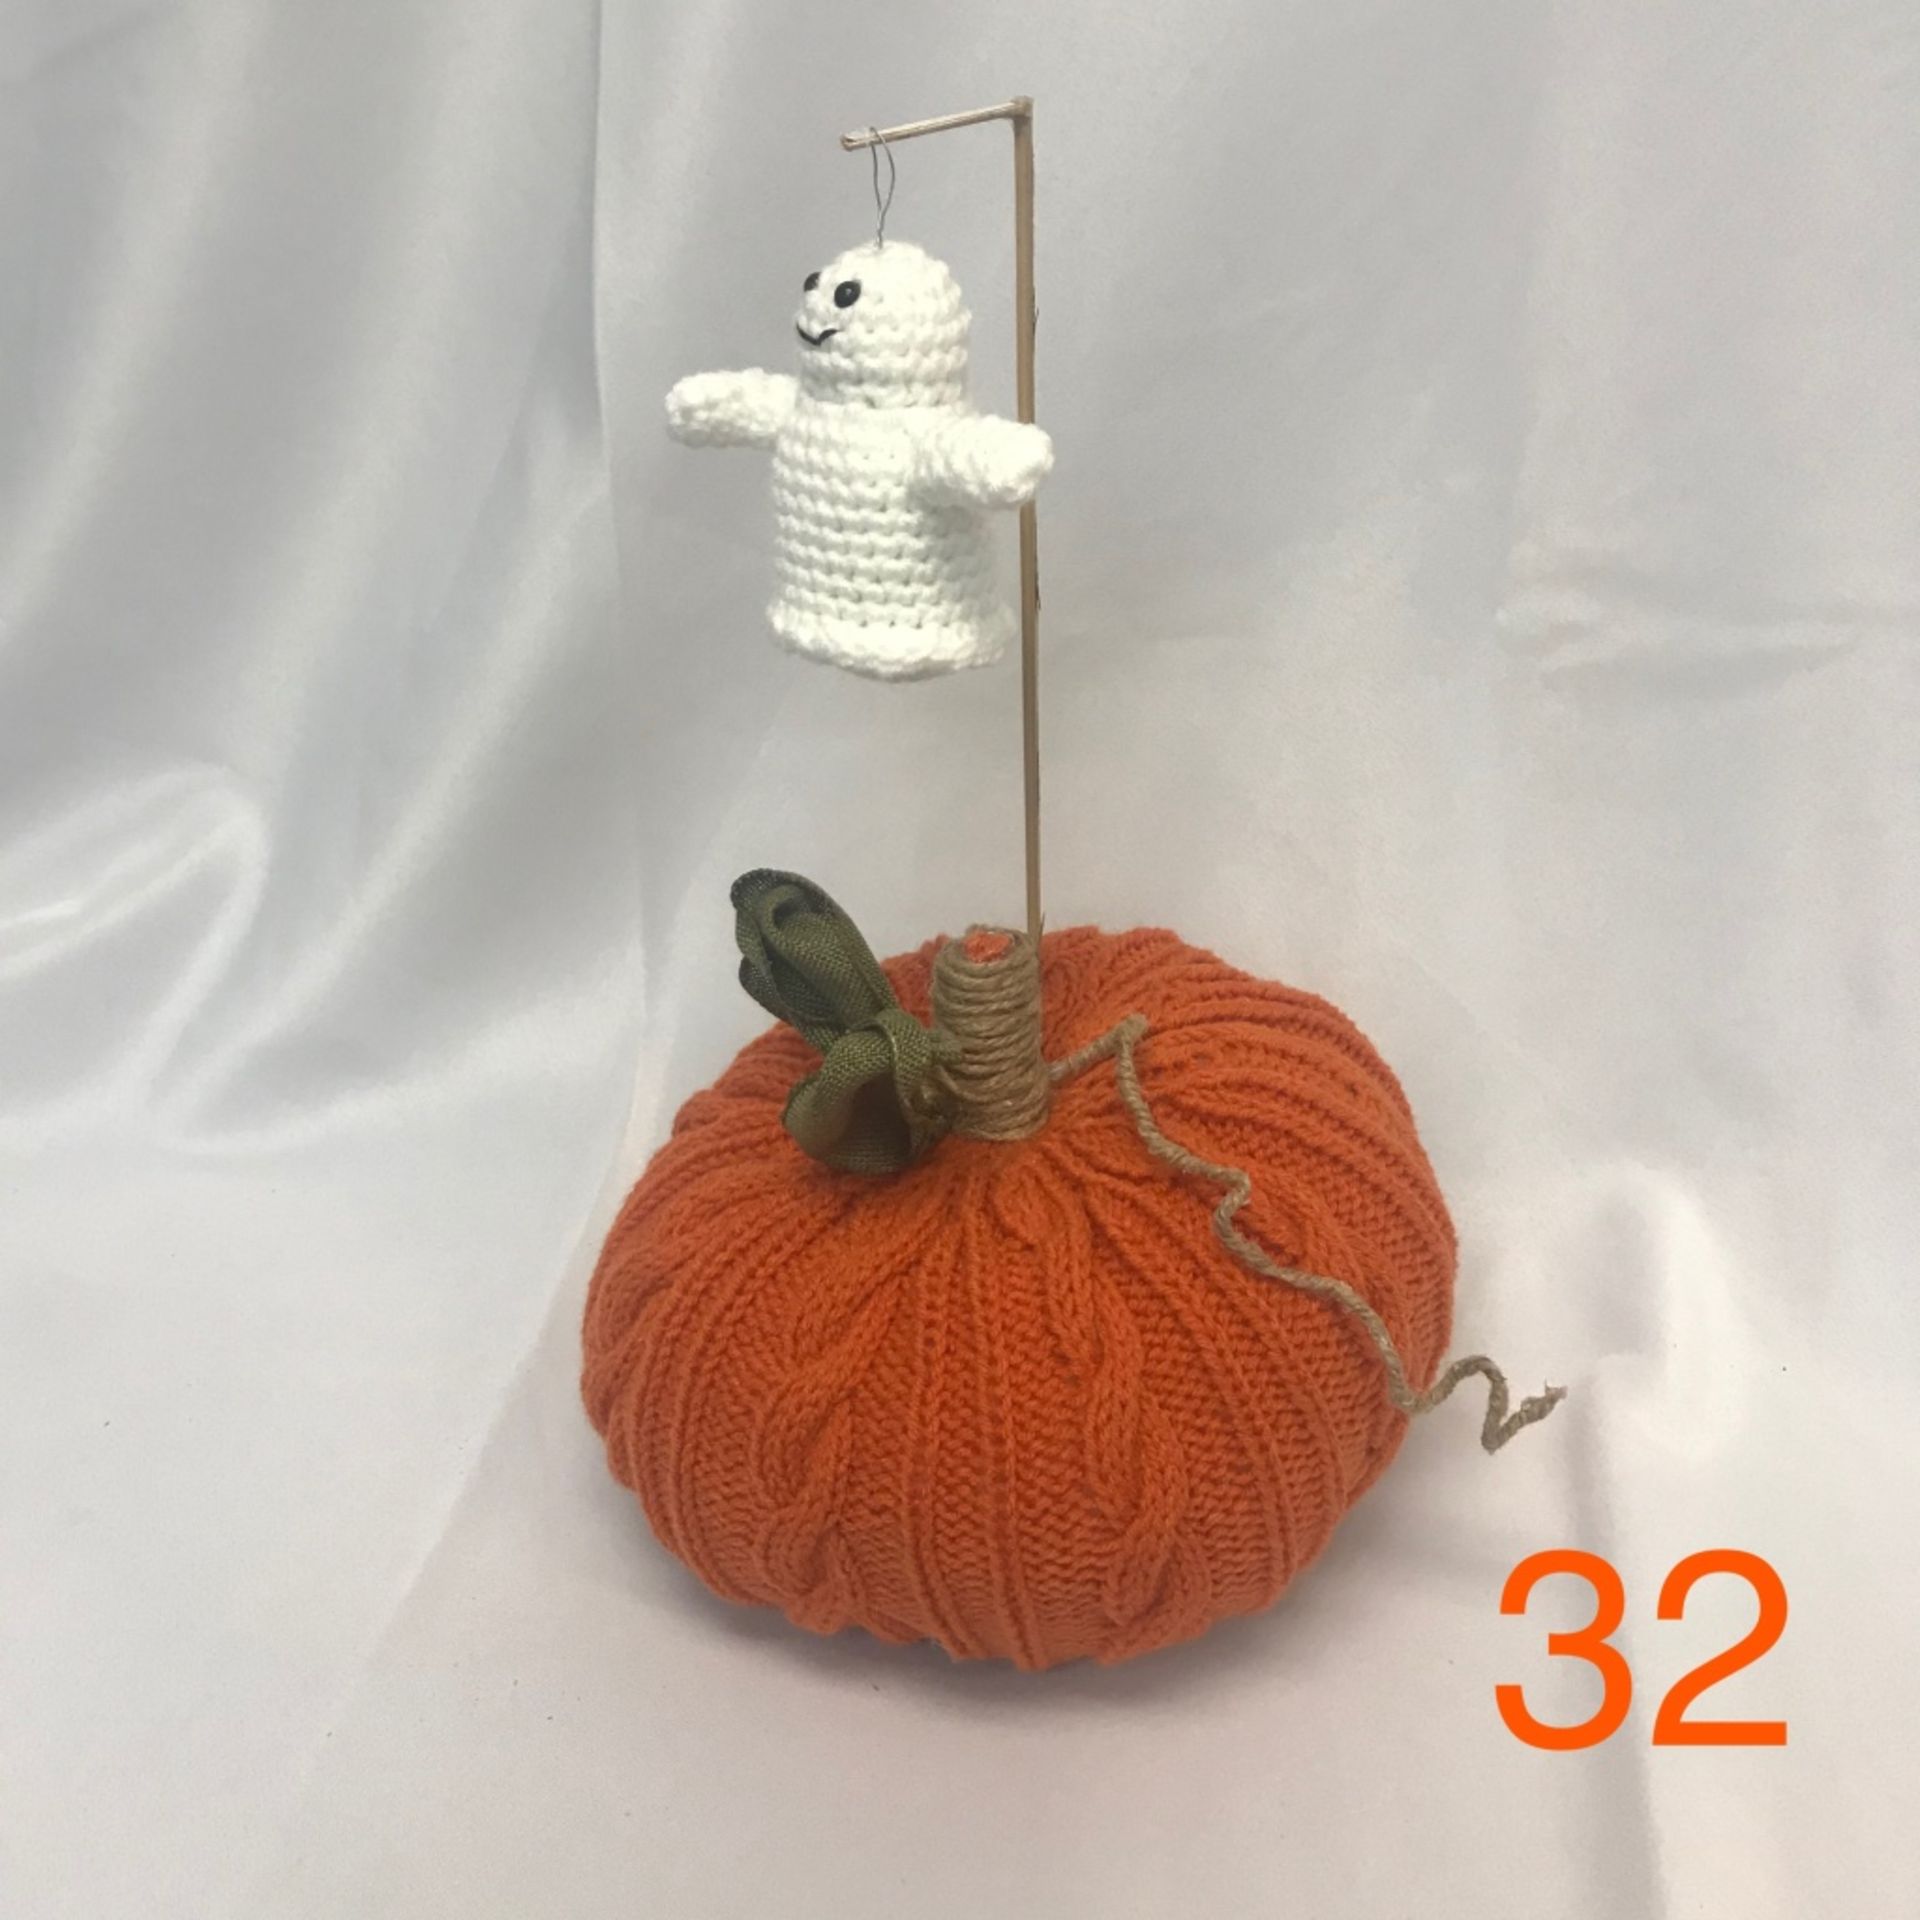 Pumpkin Crochet - Image 2 of 2